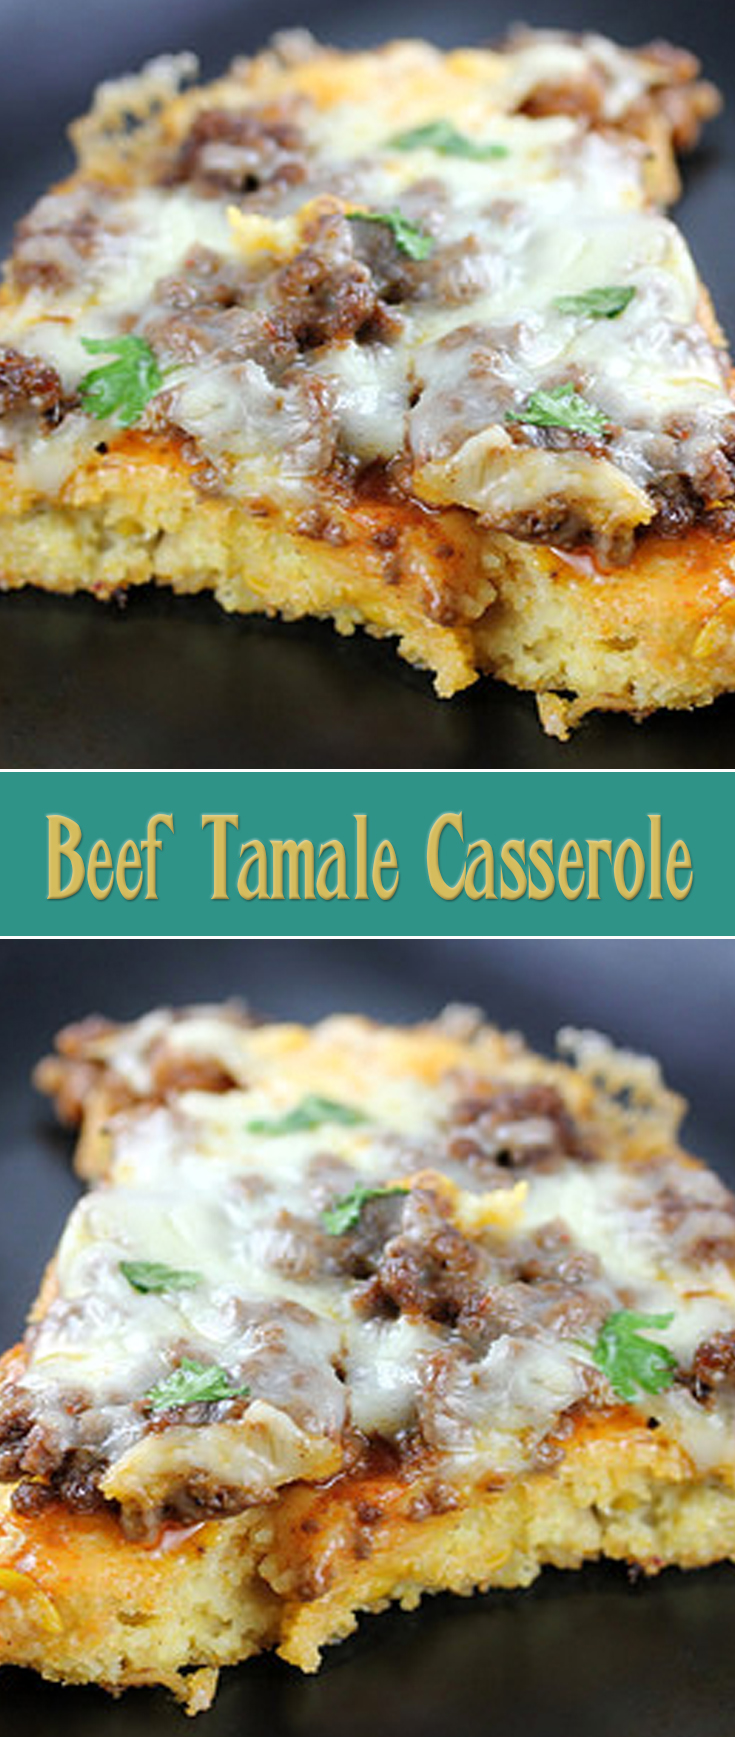 Beef Tamale Casserole